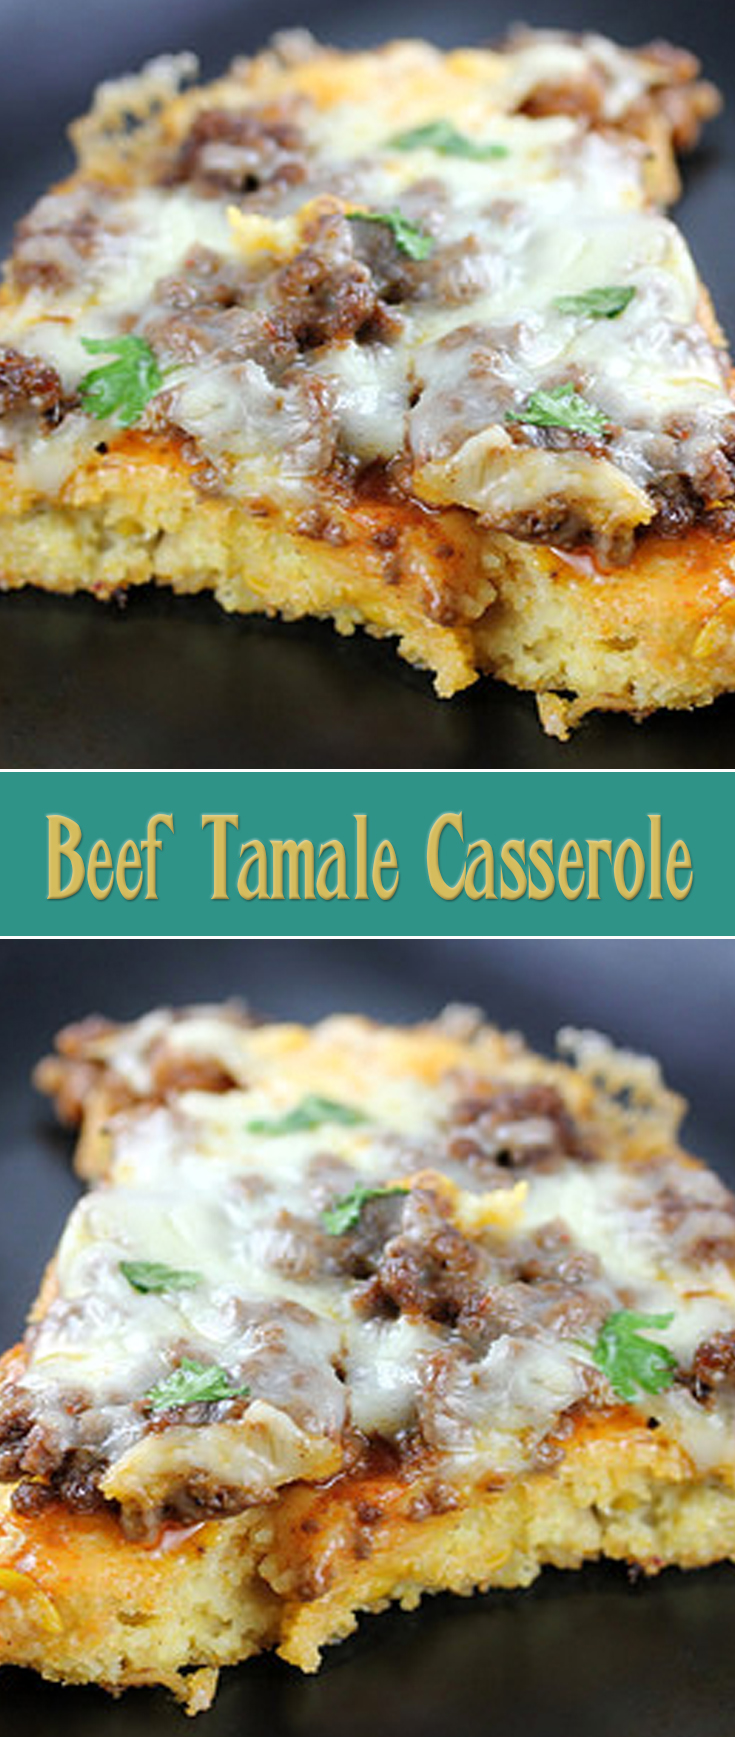 Beef Tamale Casserole